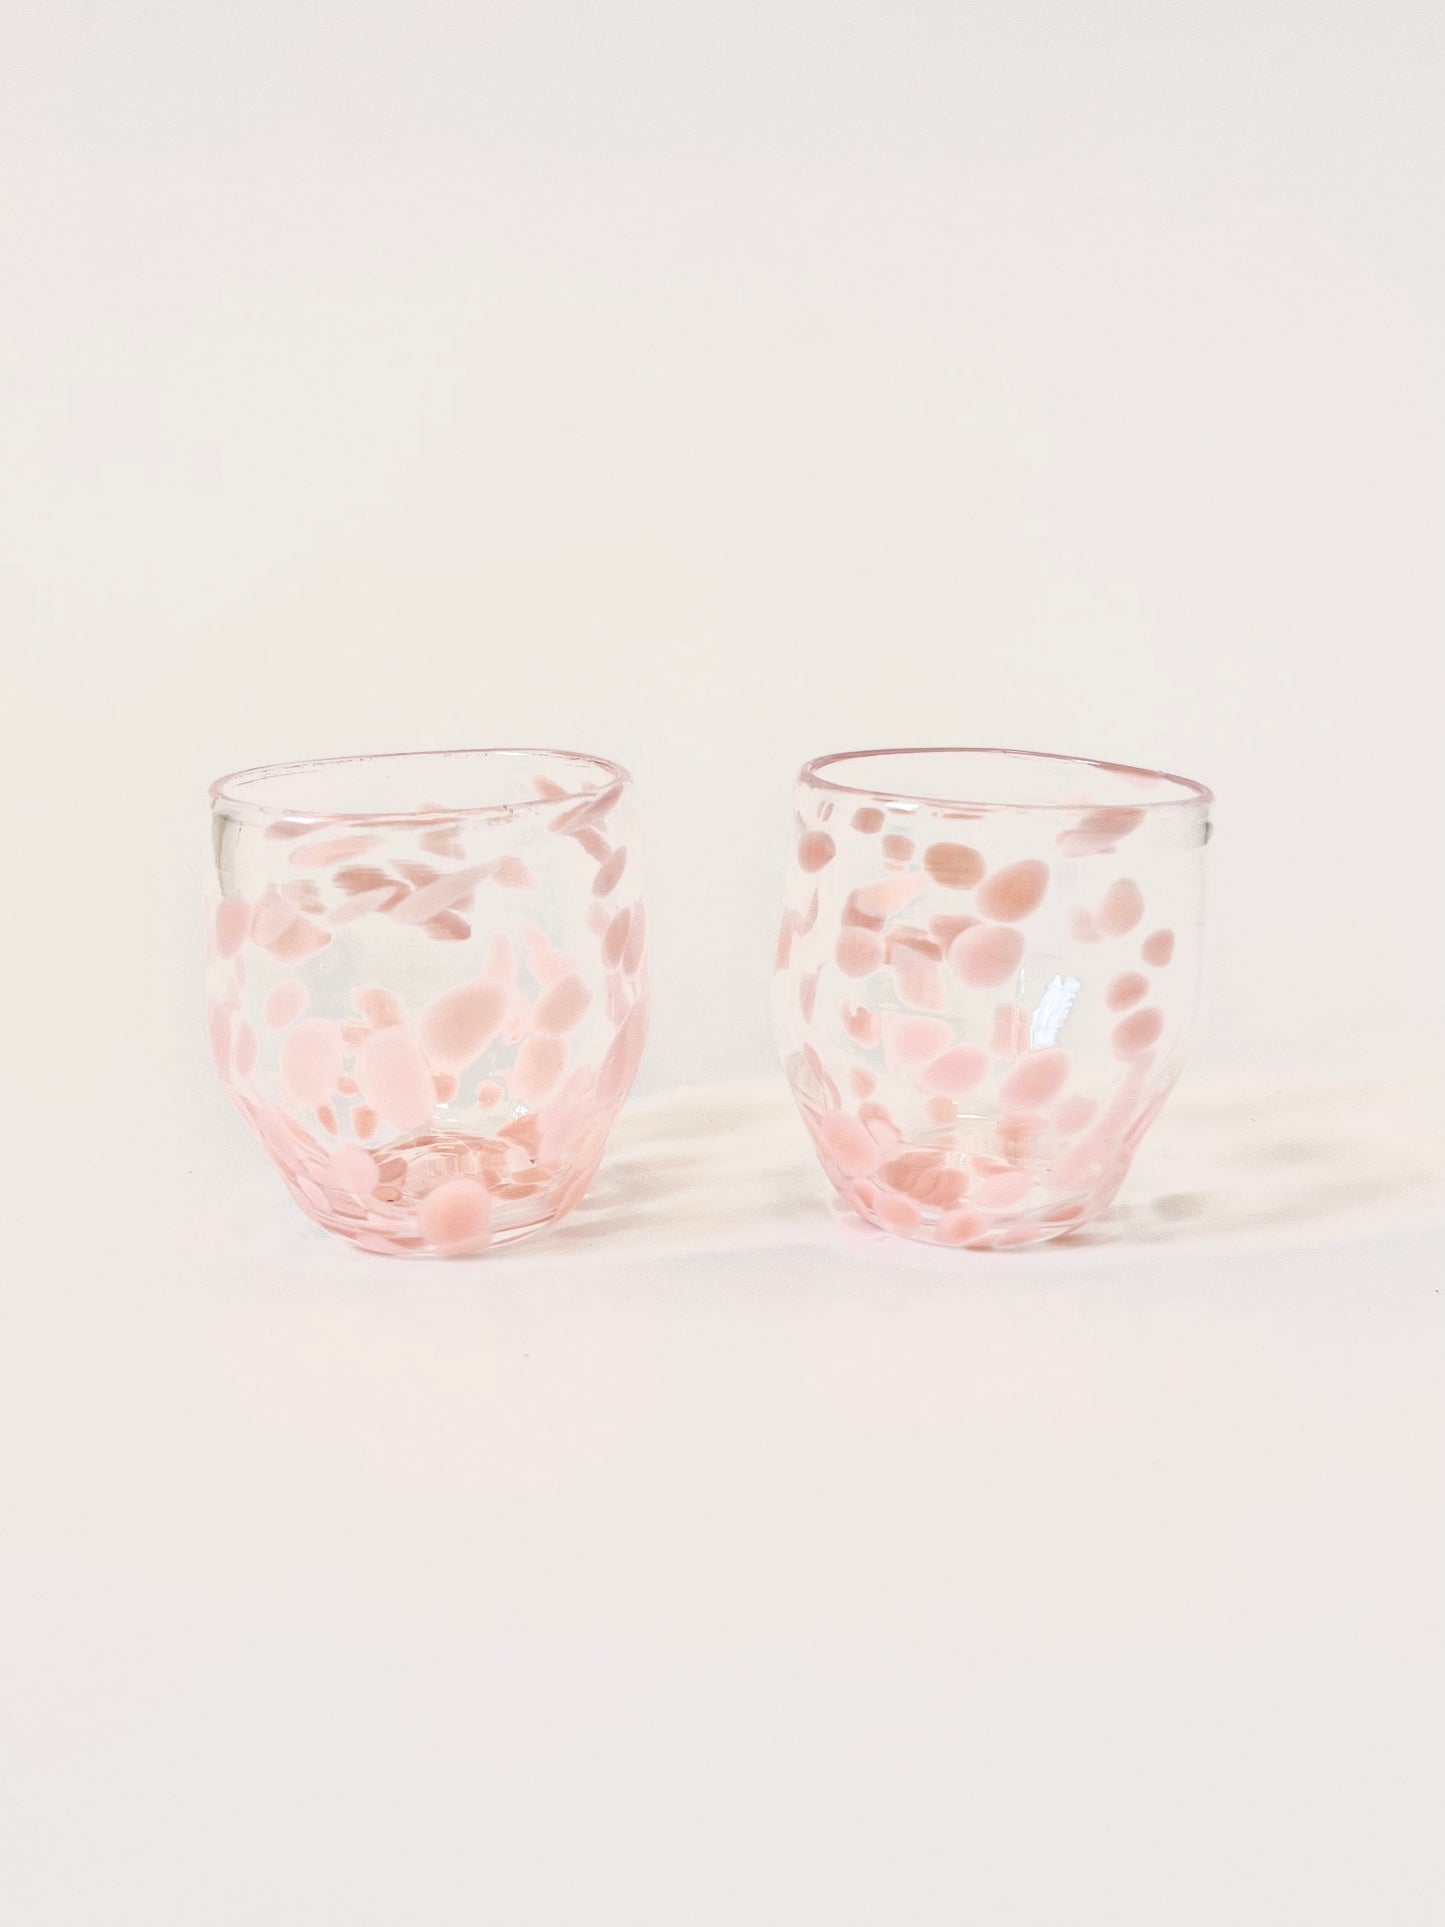 Pair of Handblown Shot Glasses - Soft Pink